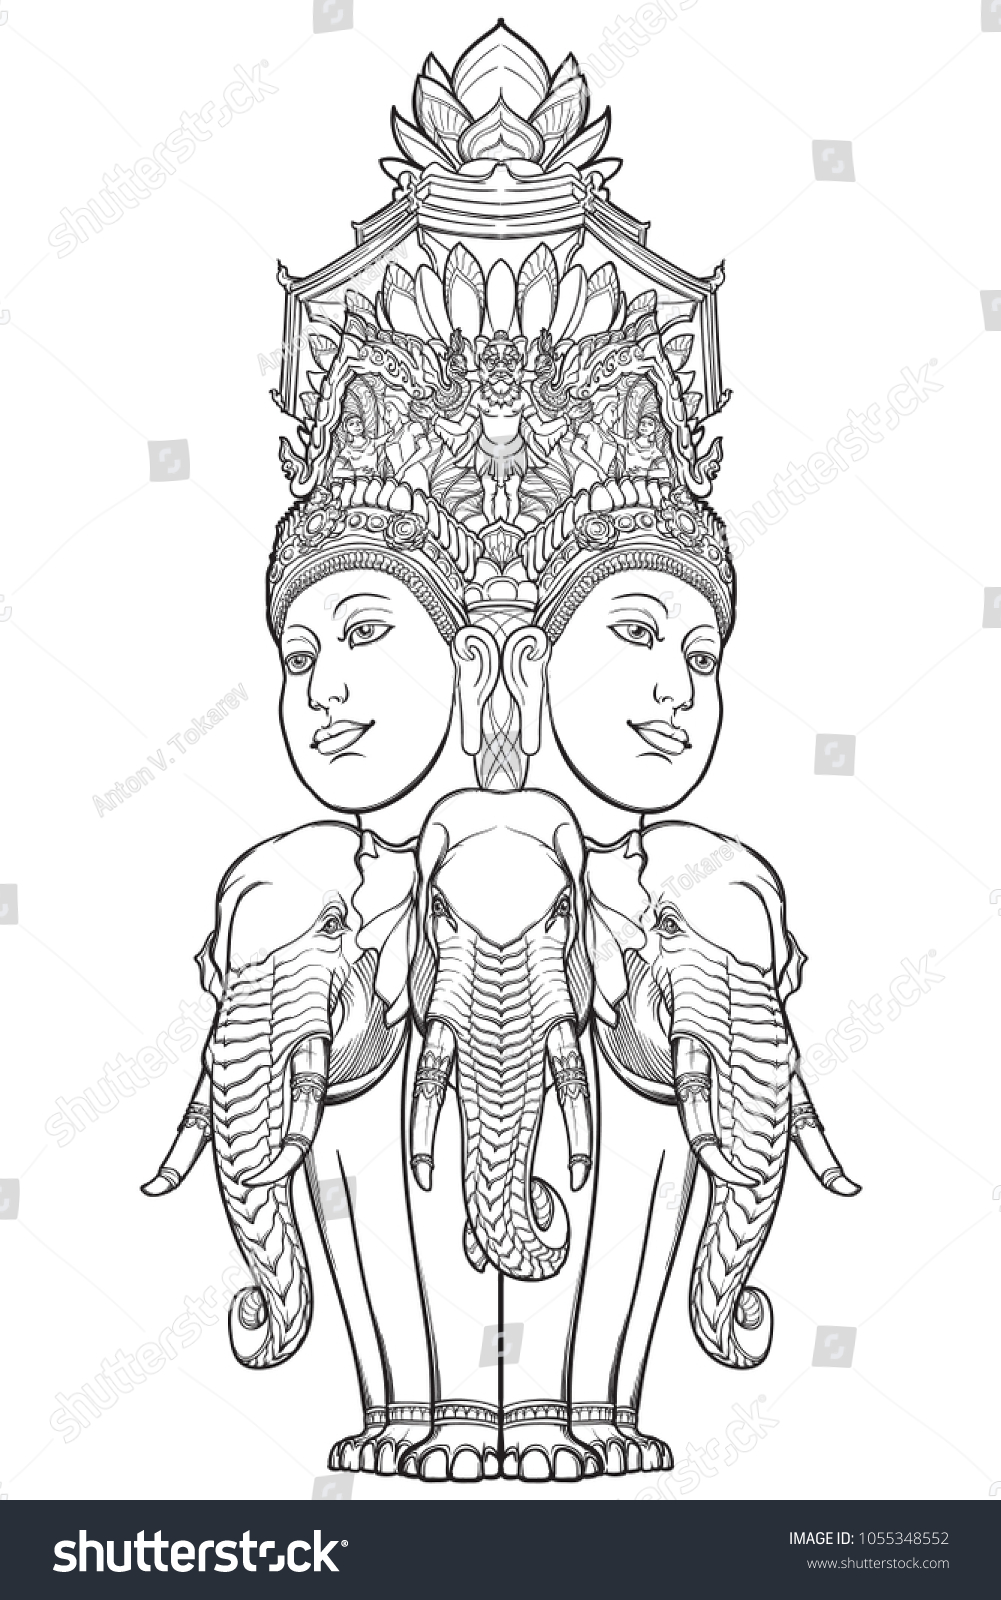 SVG of Statue representing Trimurti - trinity of Hindu gods Brahma, Vishnu and Shiva, sitting on three elephants. Intricate hand drawing isolated on white background. Tattoo design. EPS10 vector illustration svg